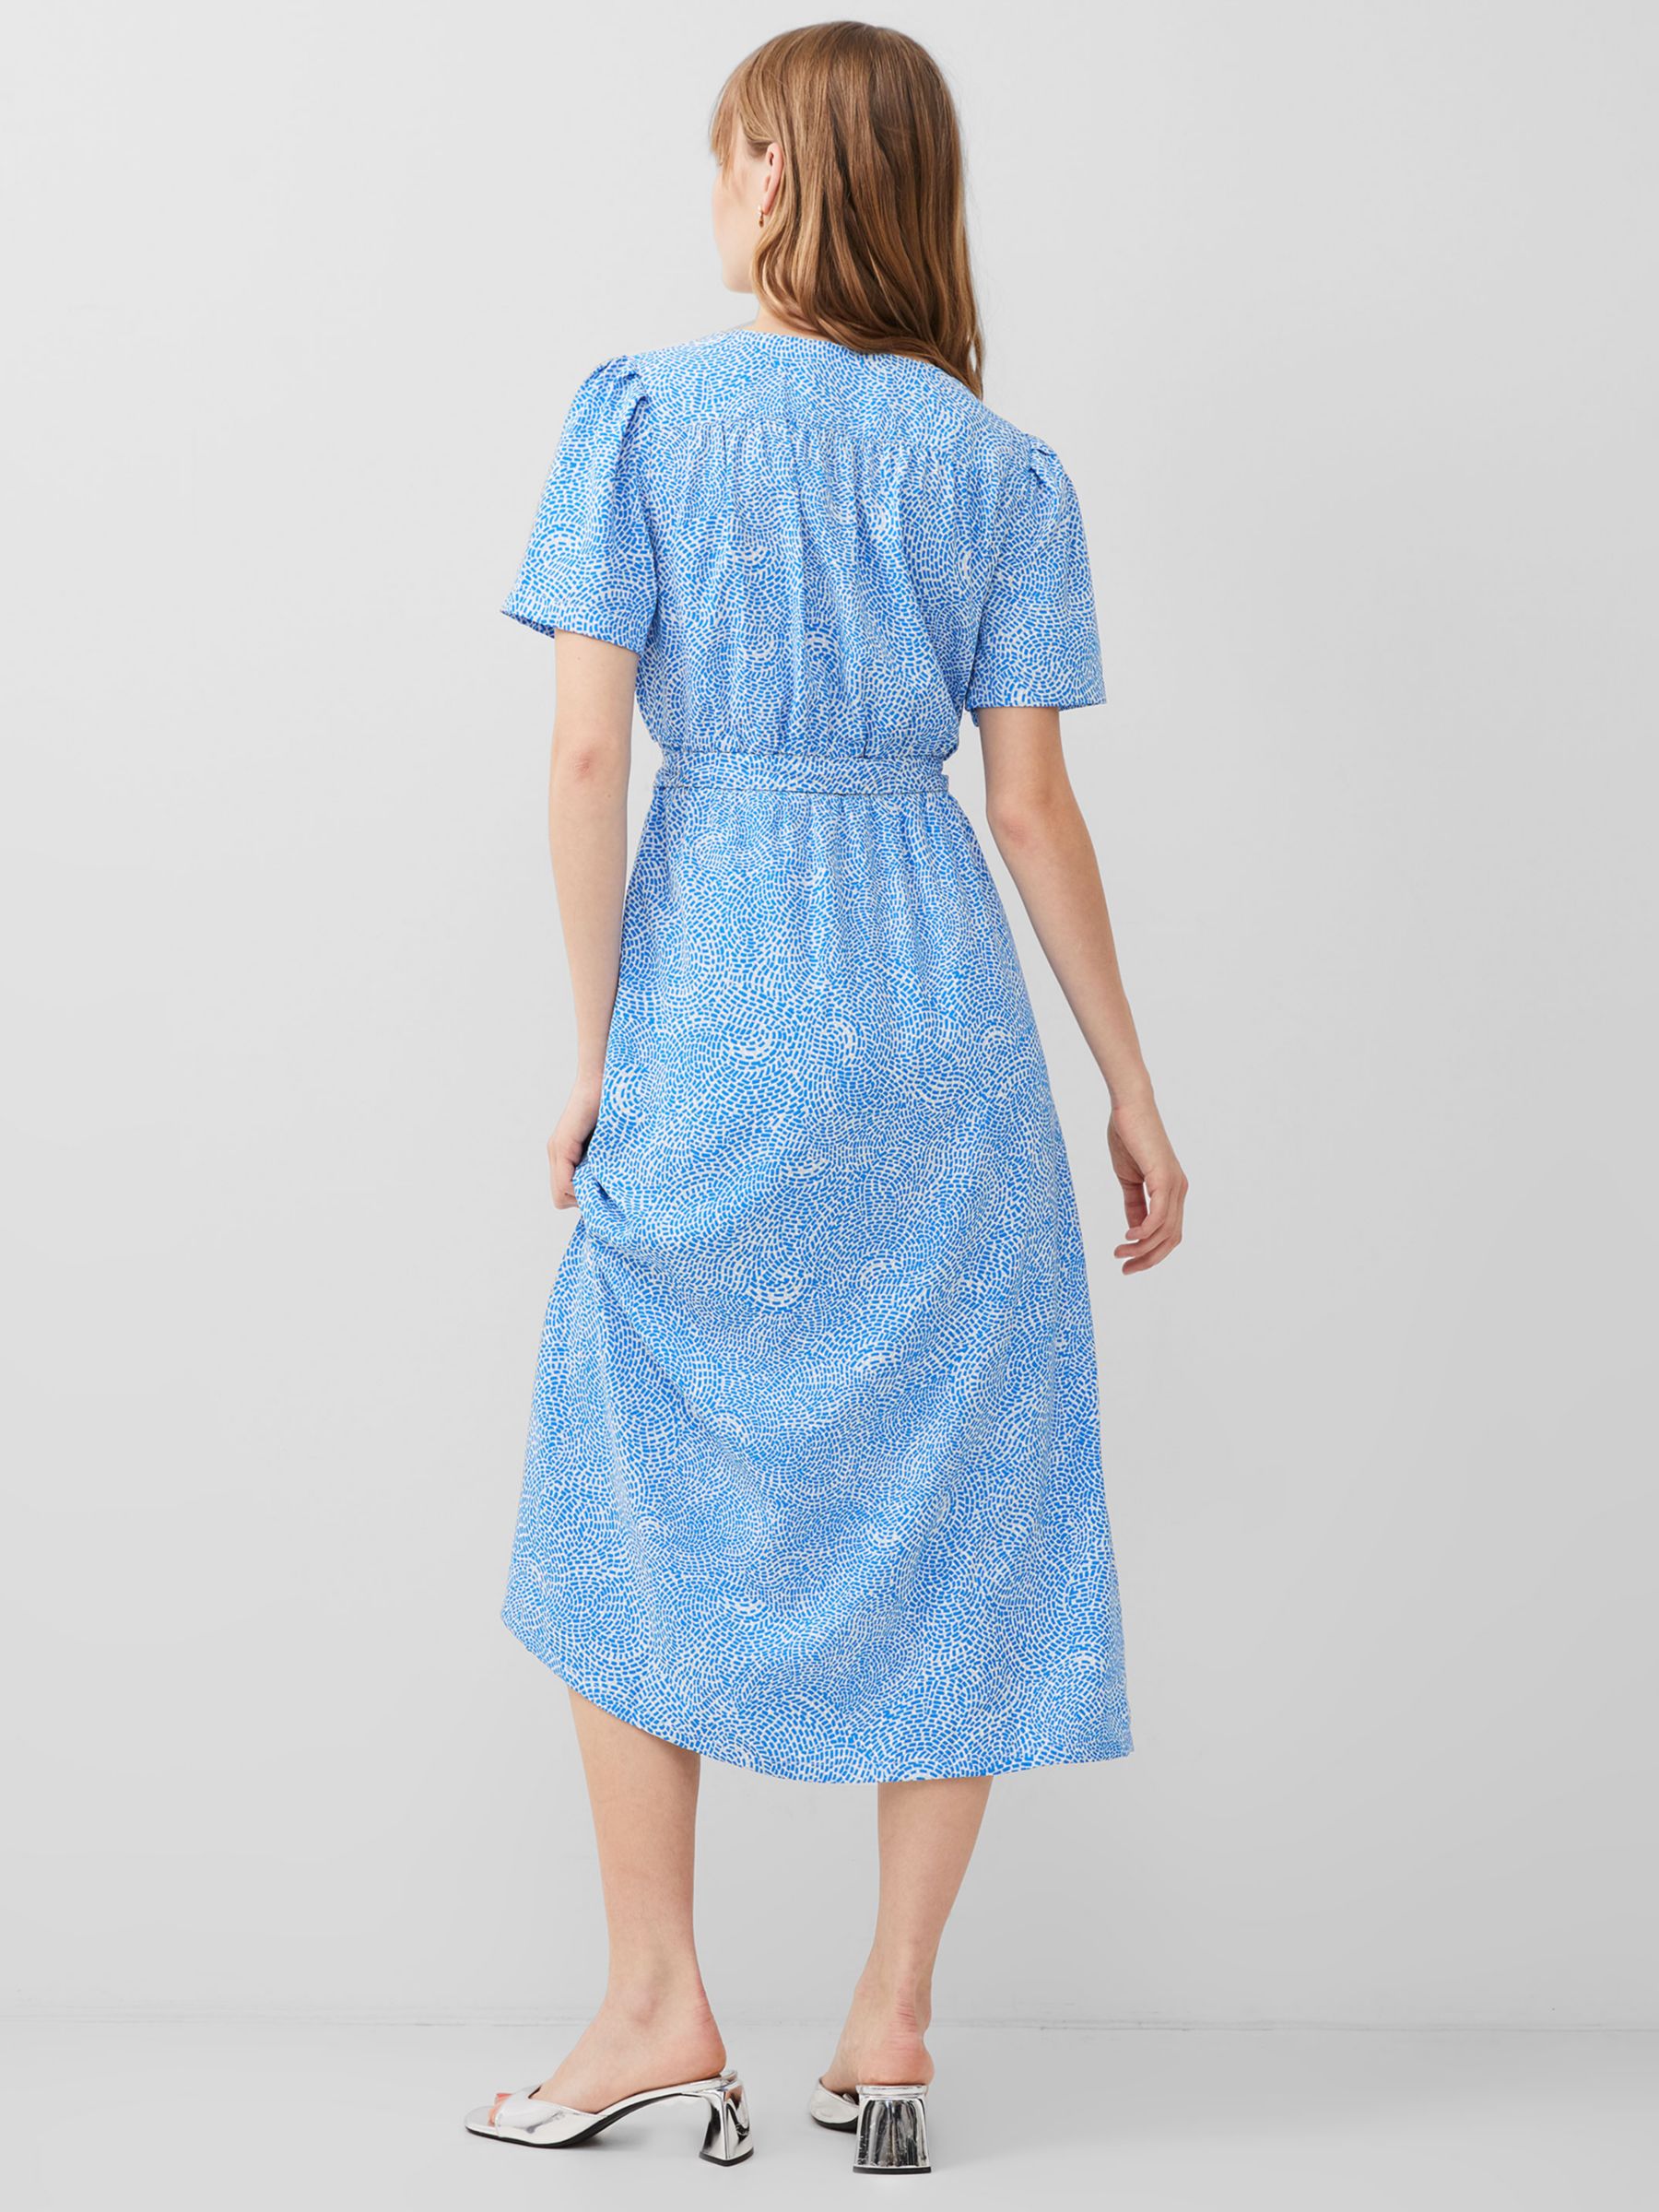 French Connection Bernice Elitan Abstract Print Midi Dress, Blue Mist, 8